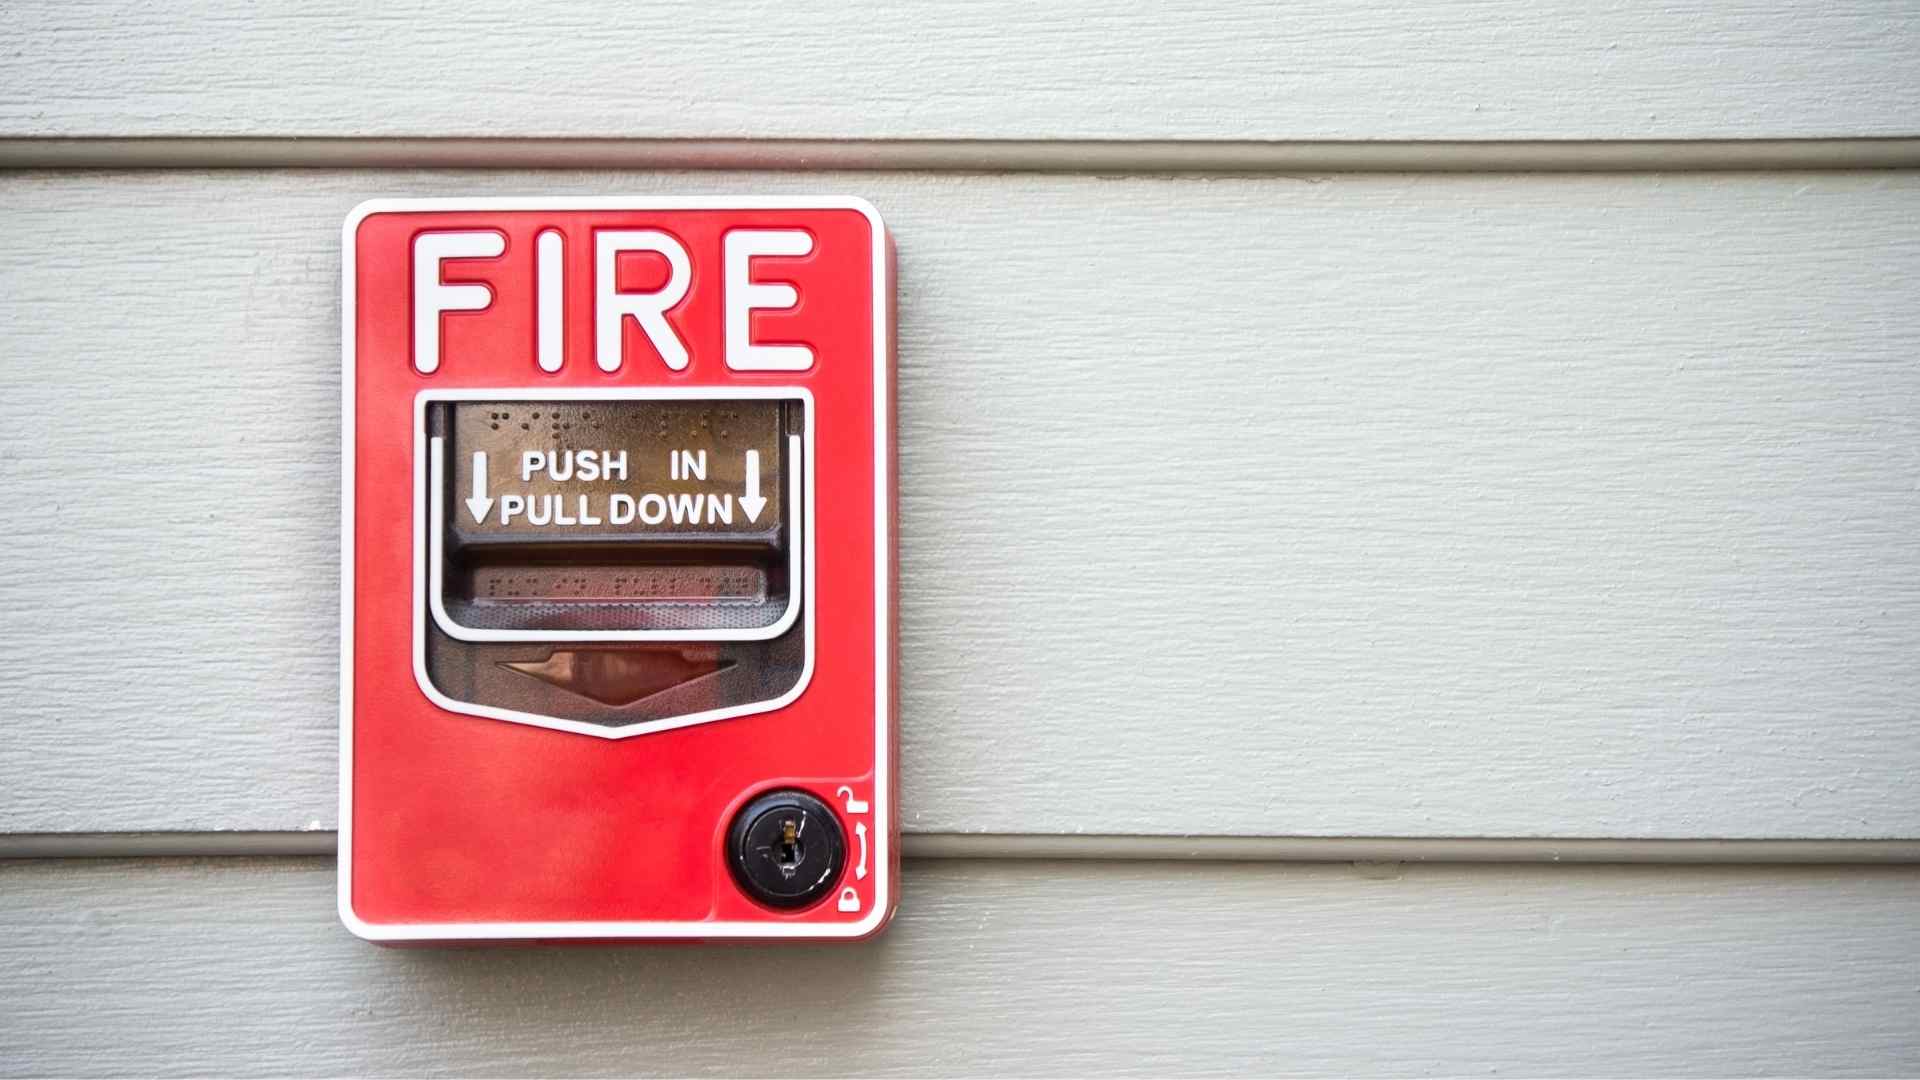 Fire Safety Tips for Seniors